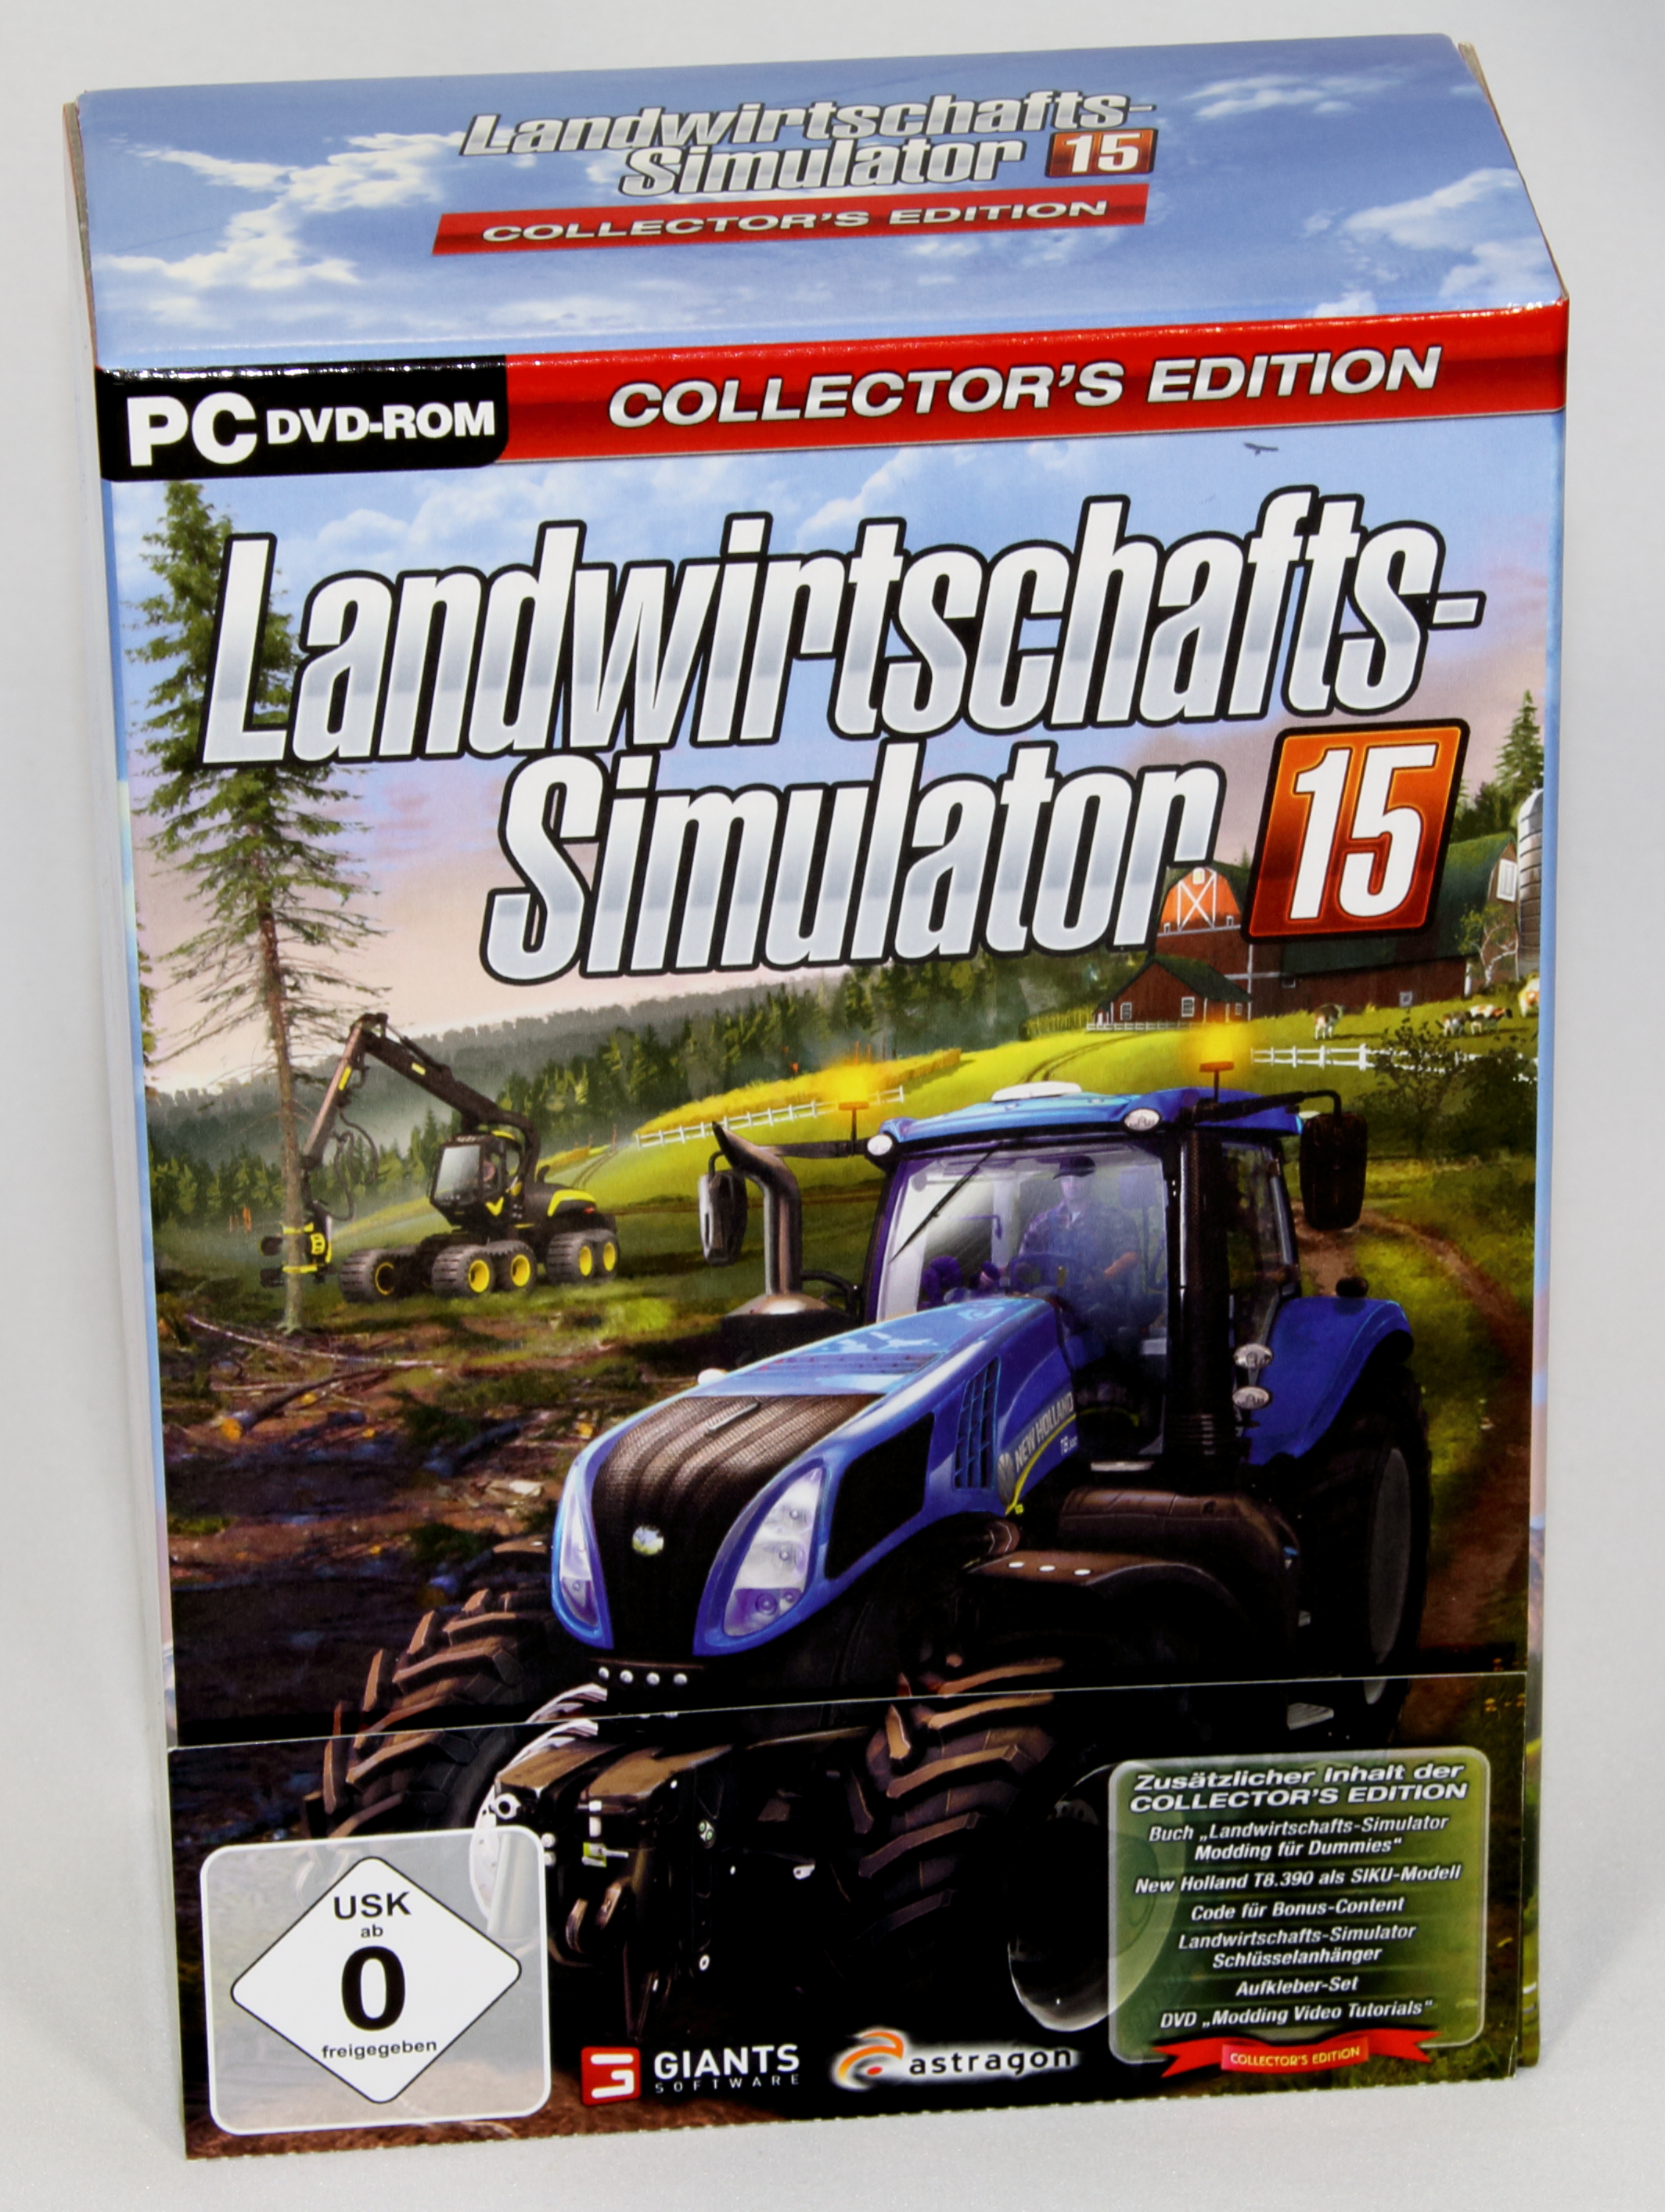 Landwirtschafts-Simulator 15 Collectors Edition Packung